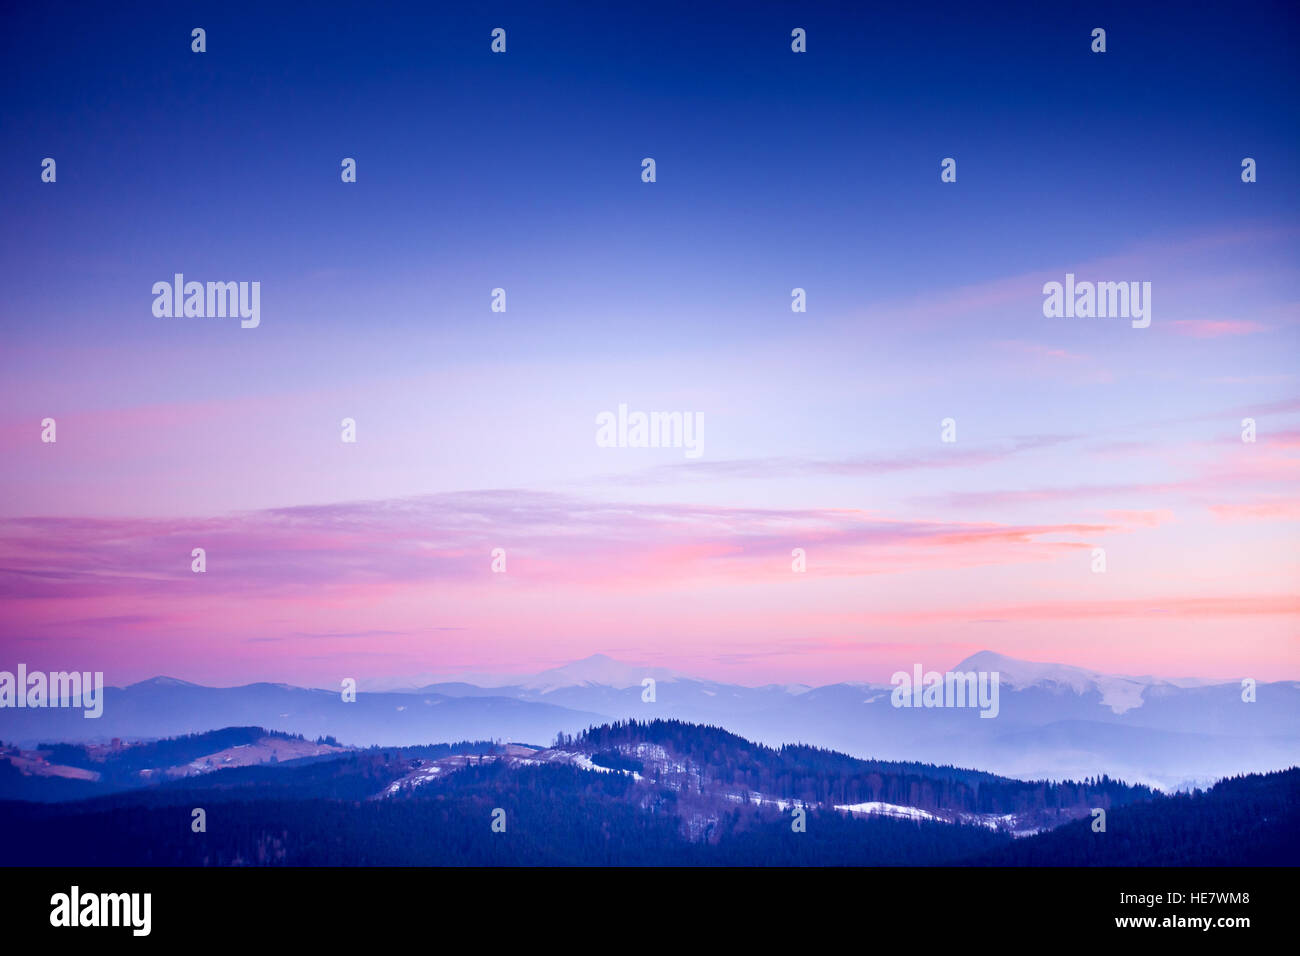 Amazing evening winter landscape Stock Photo